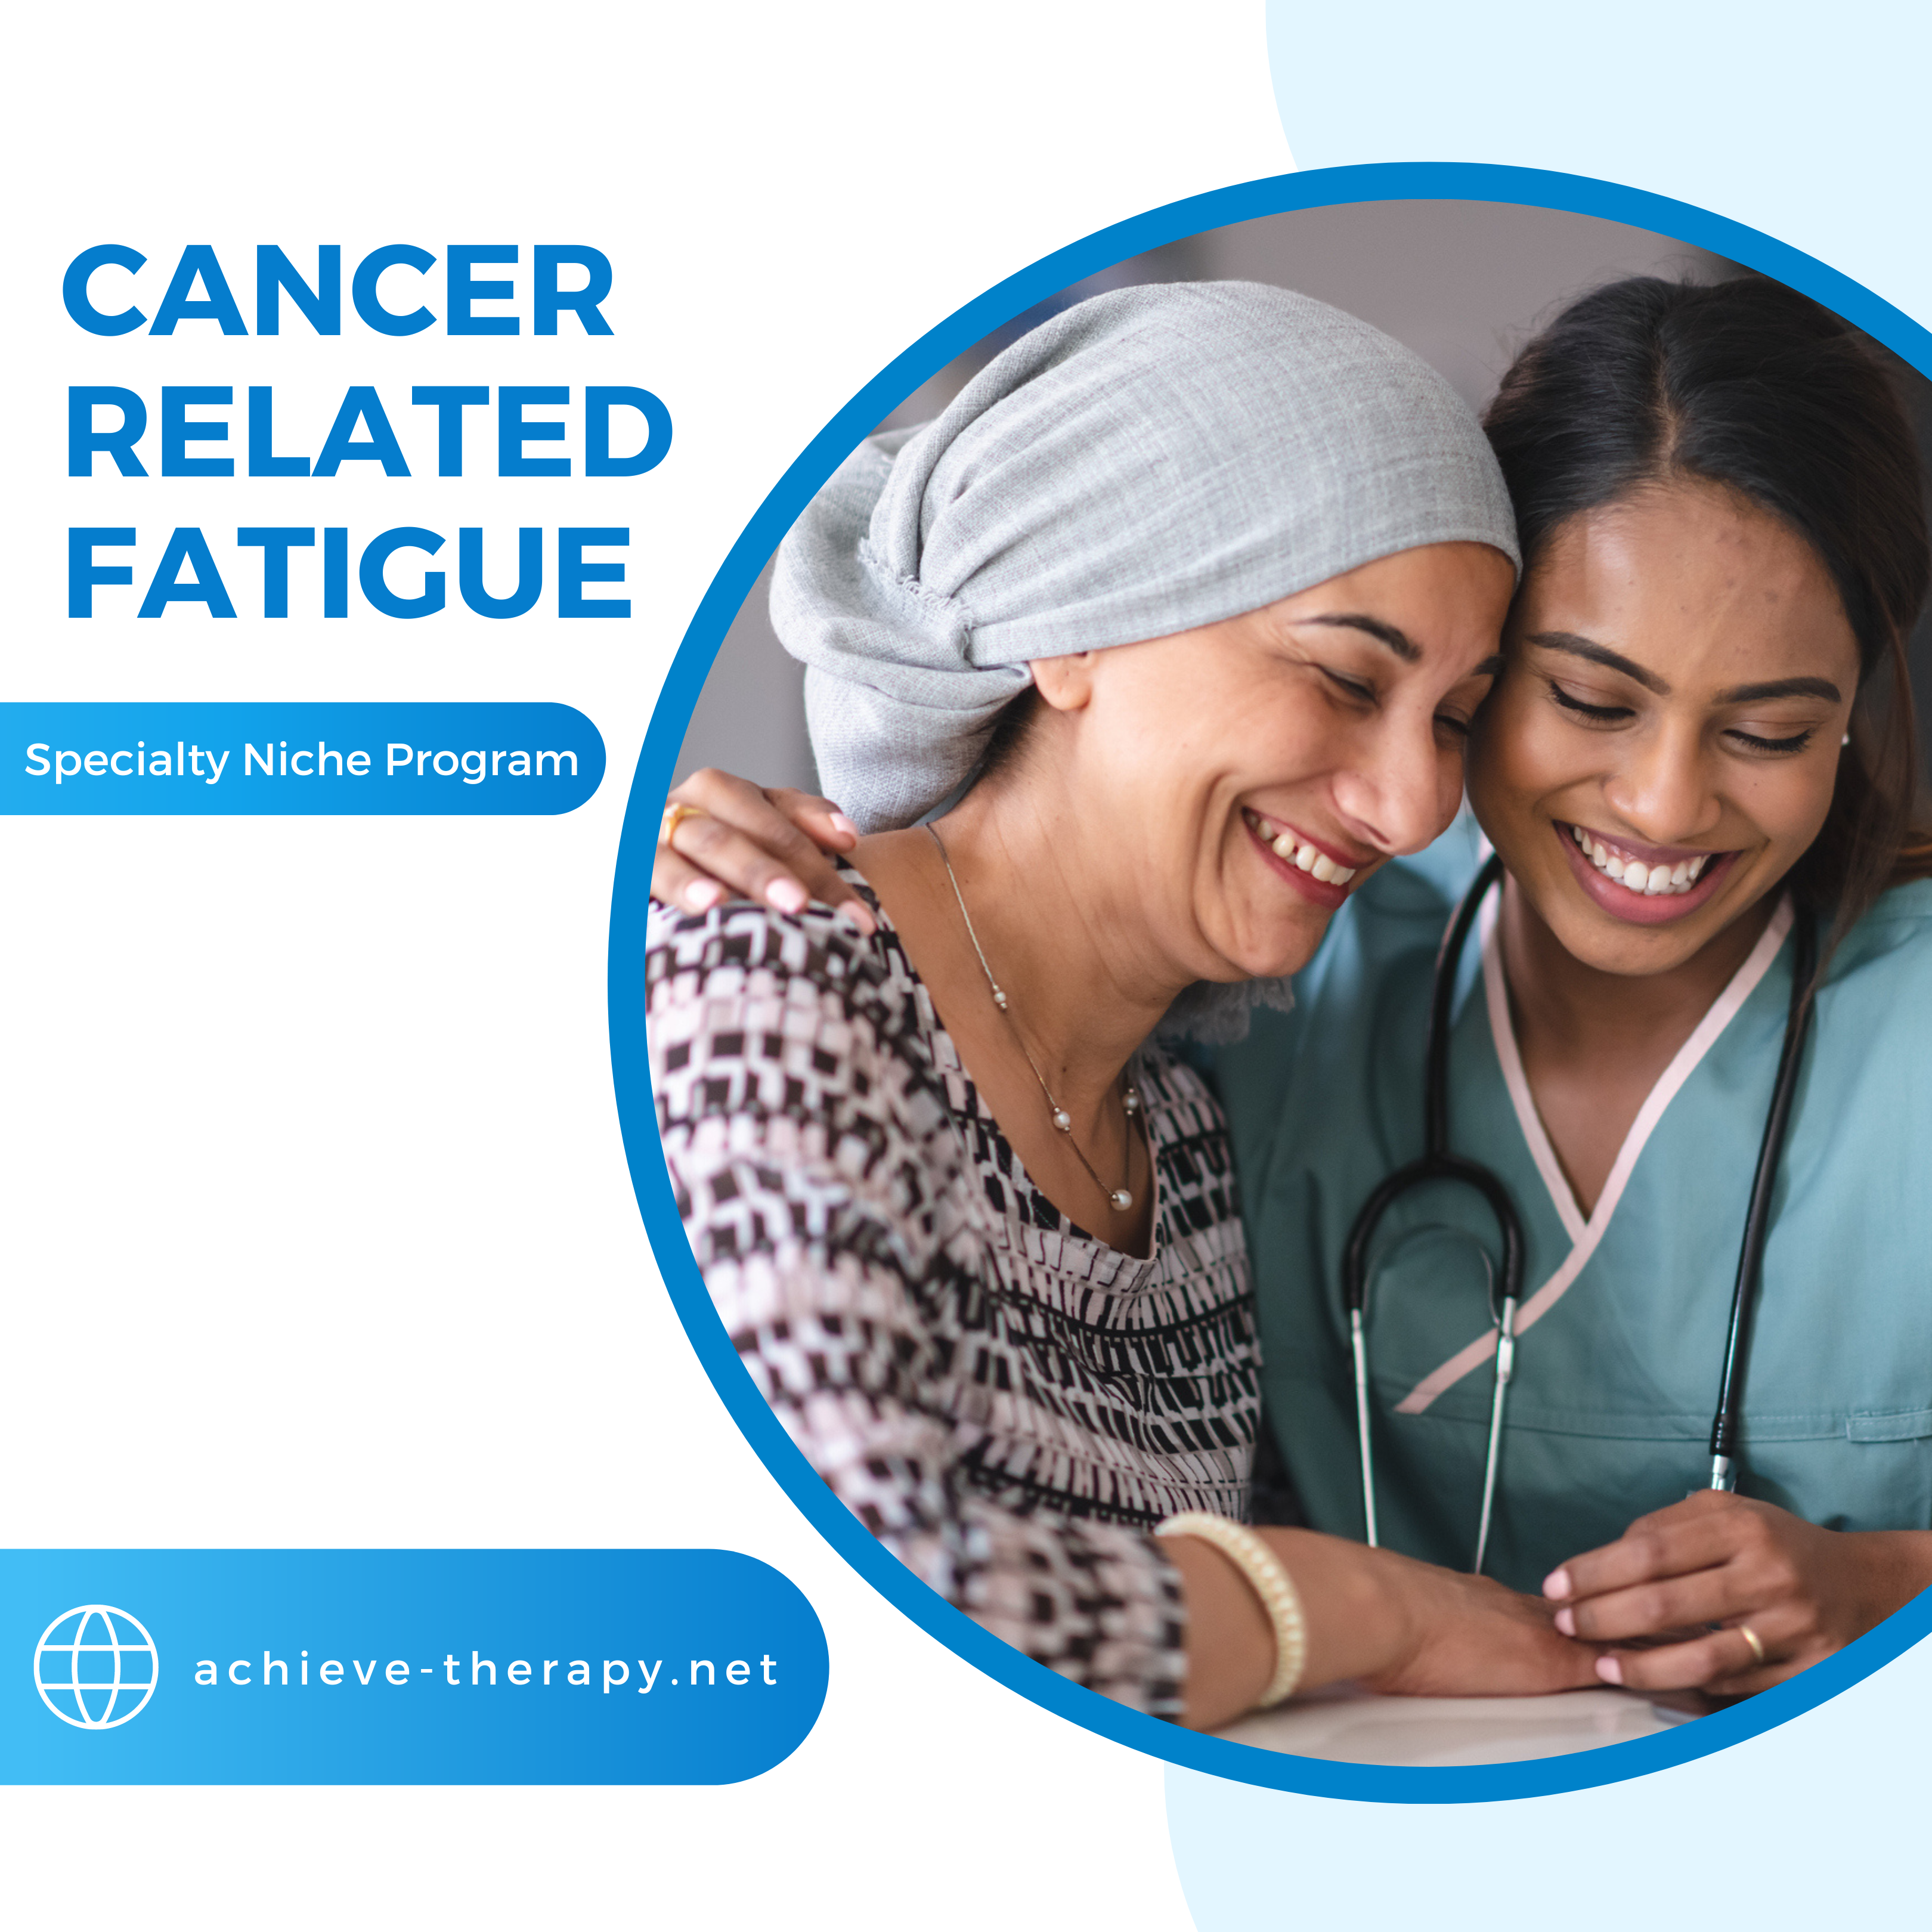 Cancer Related Fatigue